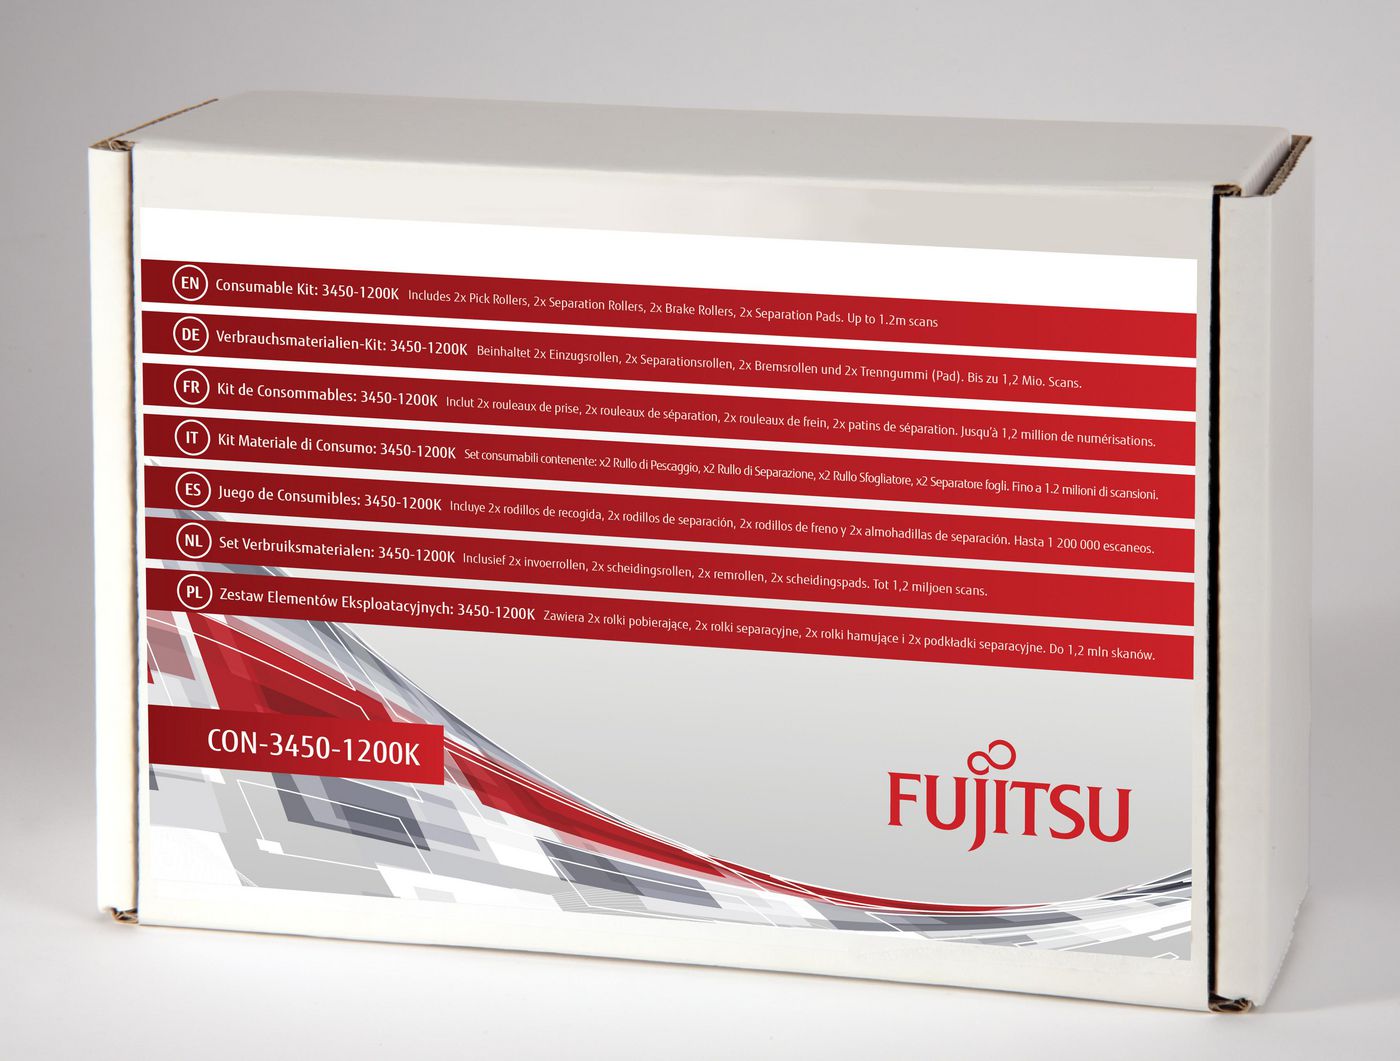 FUJITSU CONSUMABLE KIT F/ FI-5900C